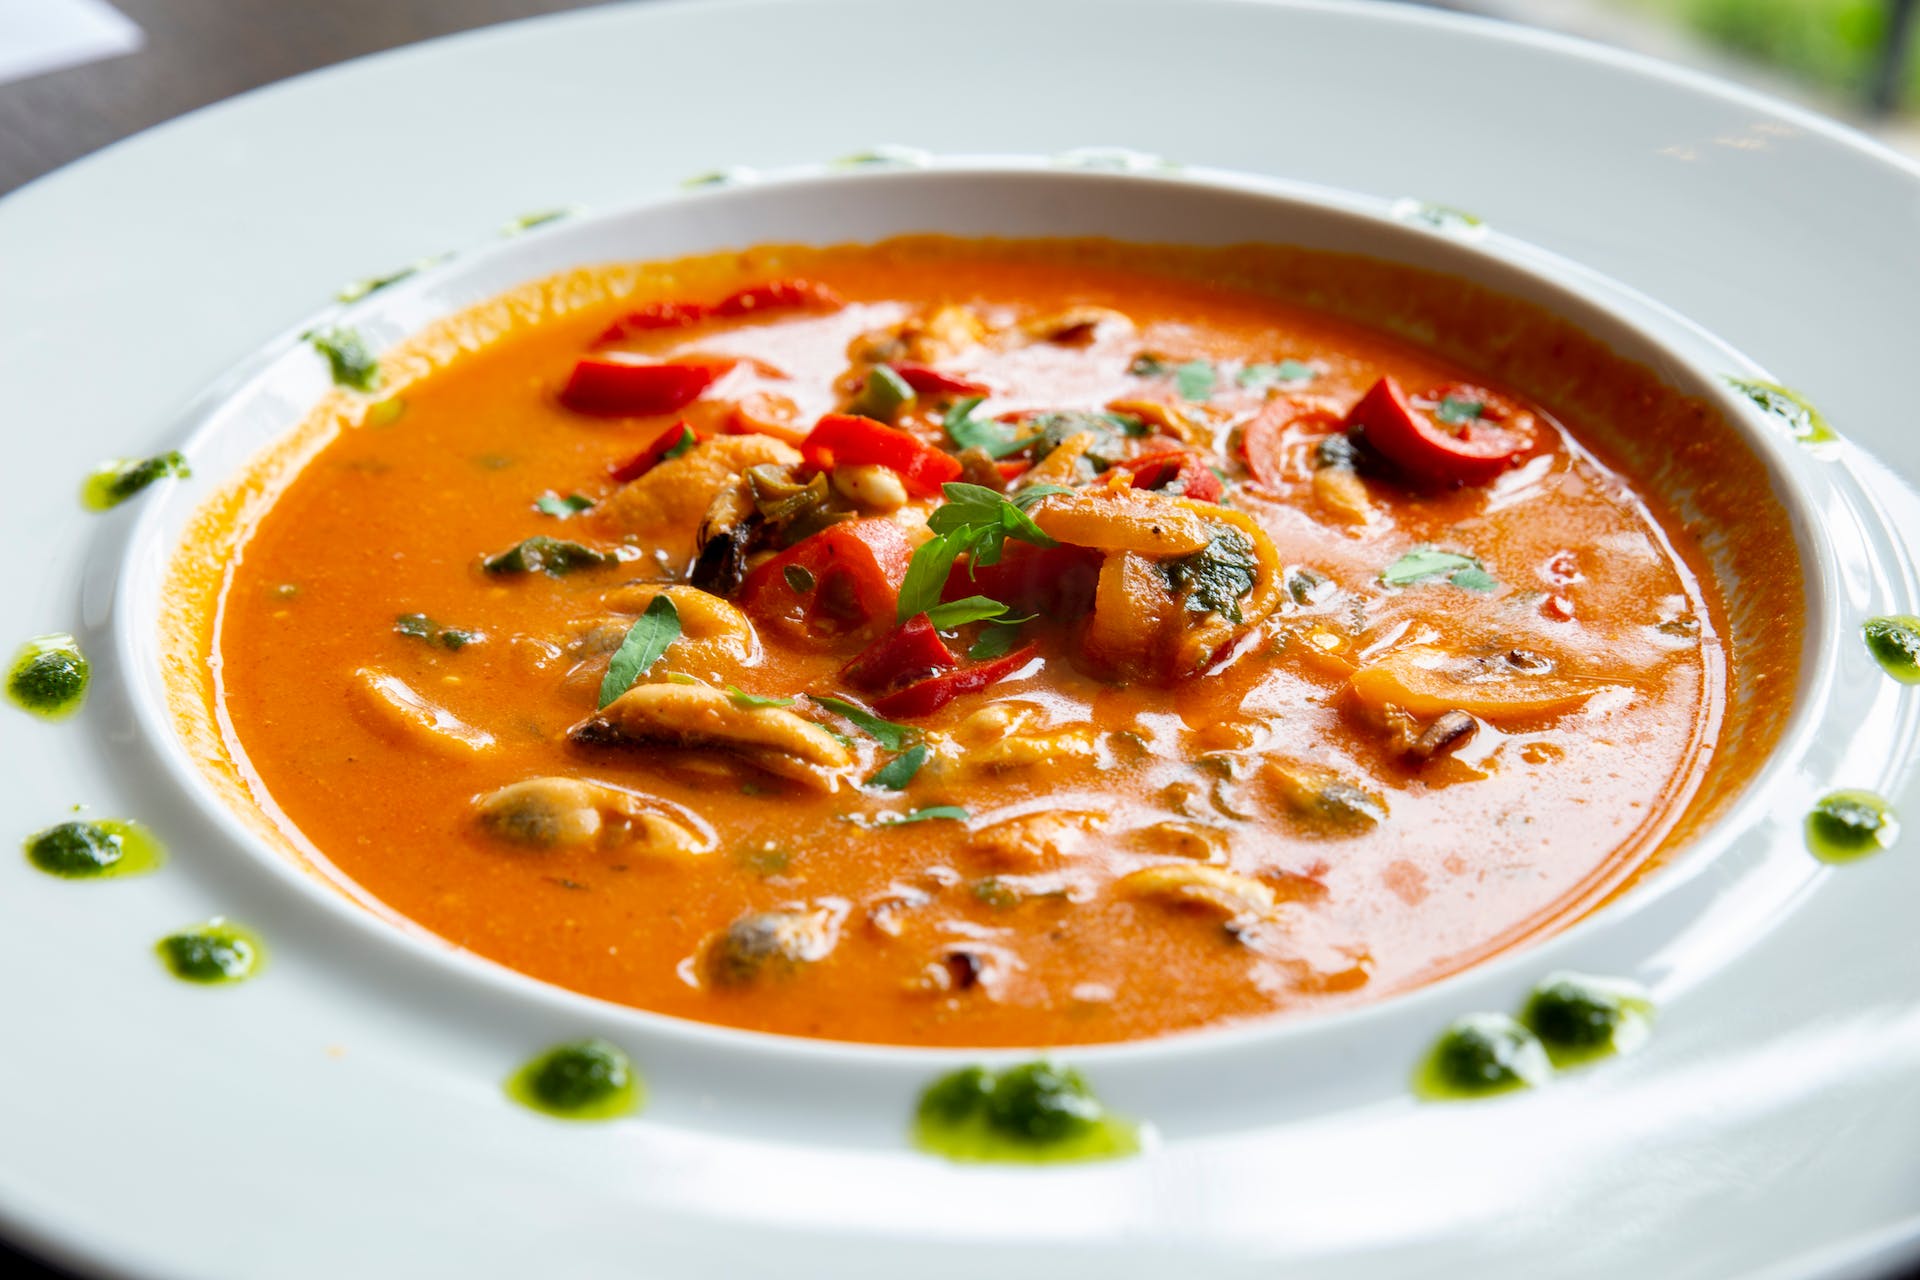 Bowl of soup | Source: Pexels